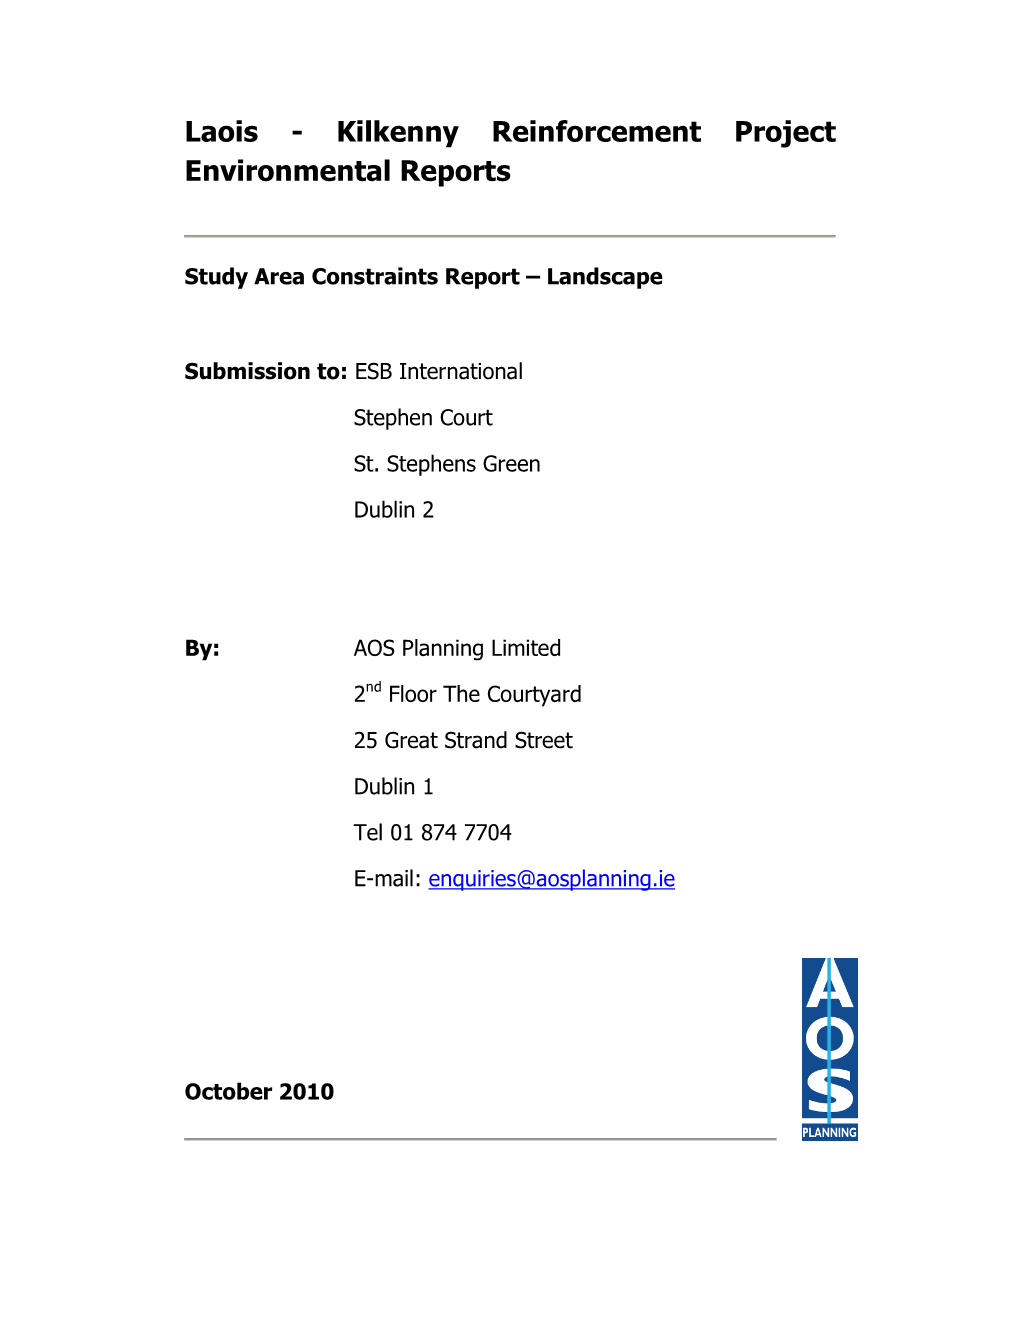 Laois - Kilkenny Reinforcement Project Environmental Reports